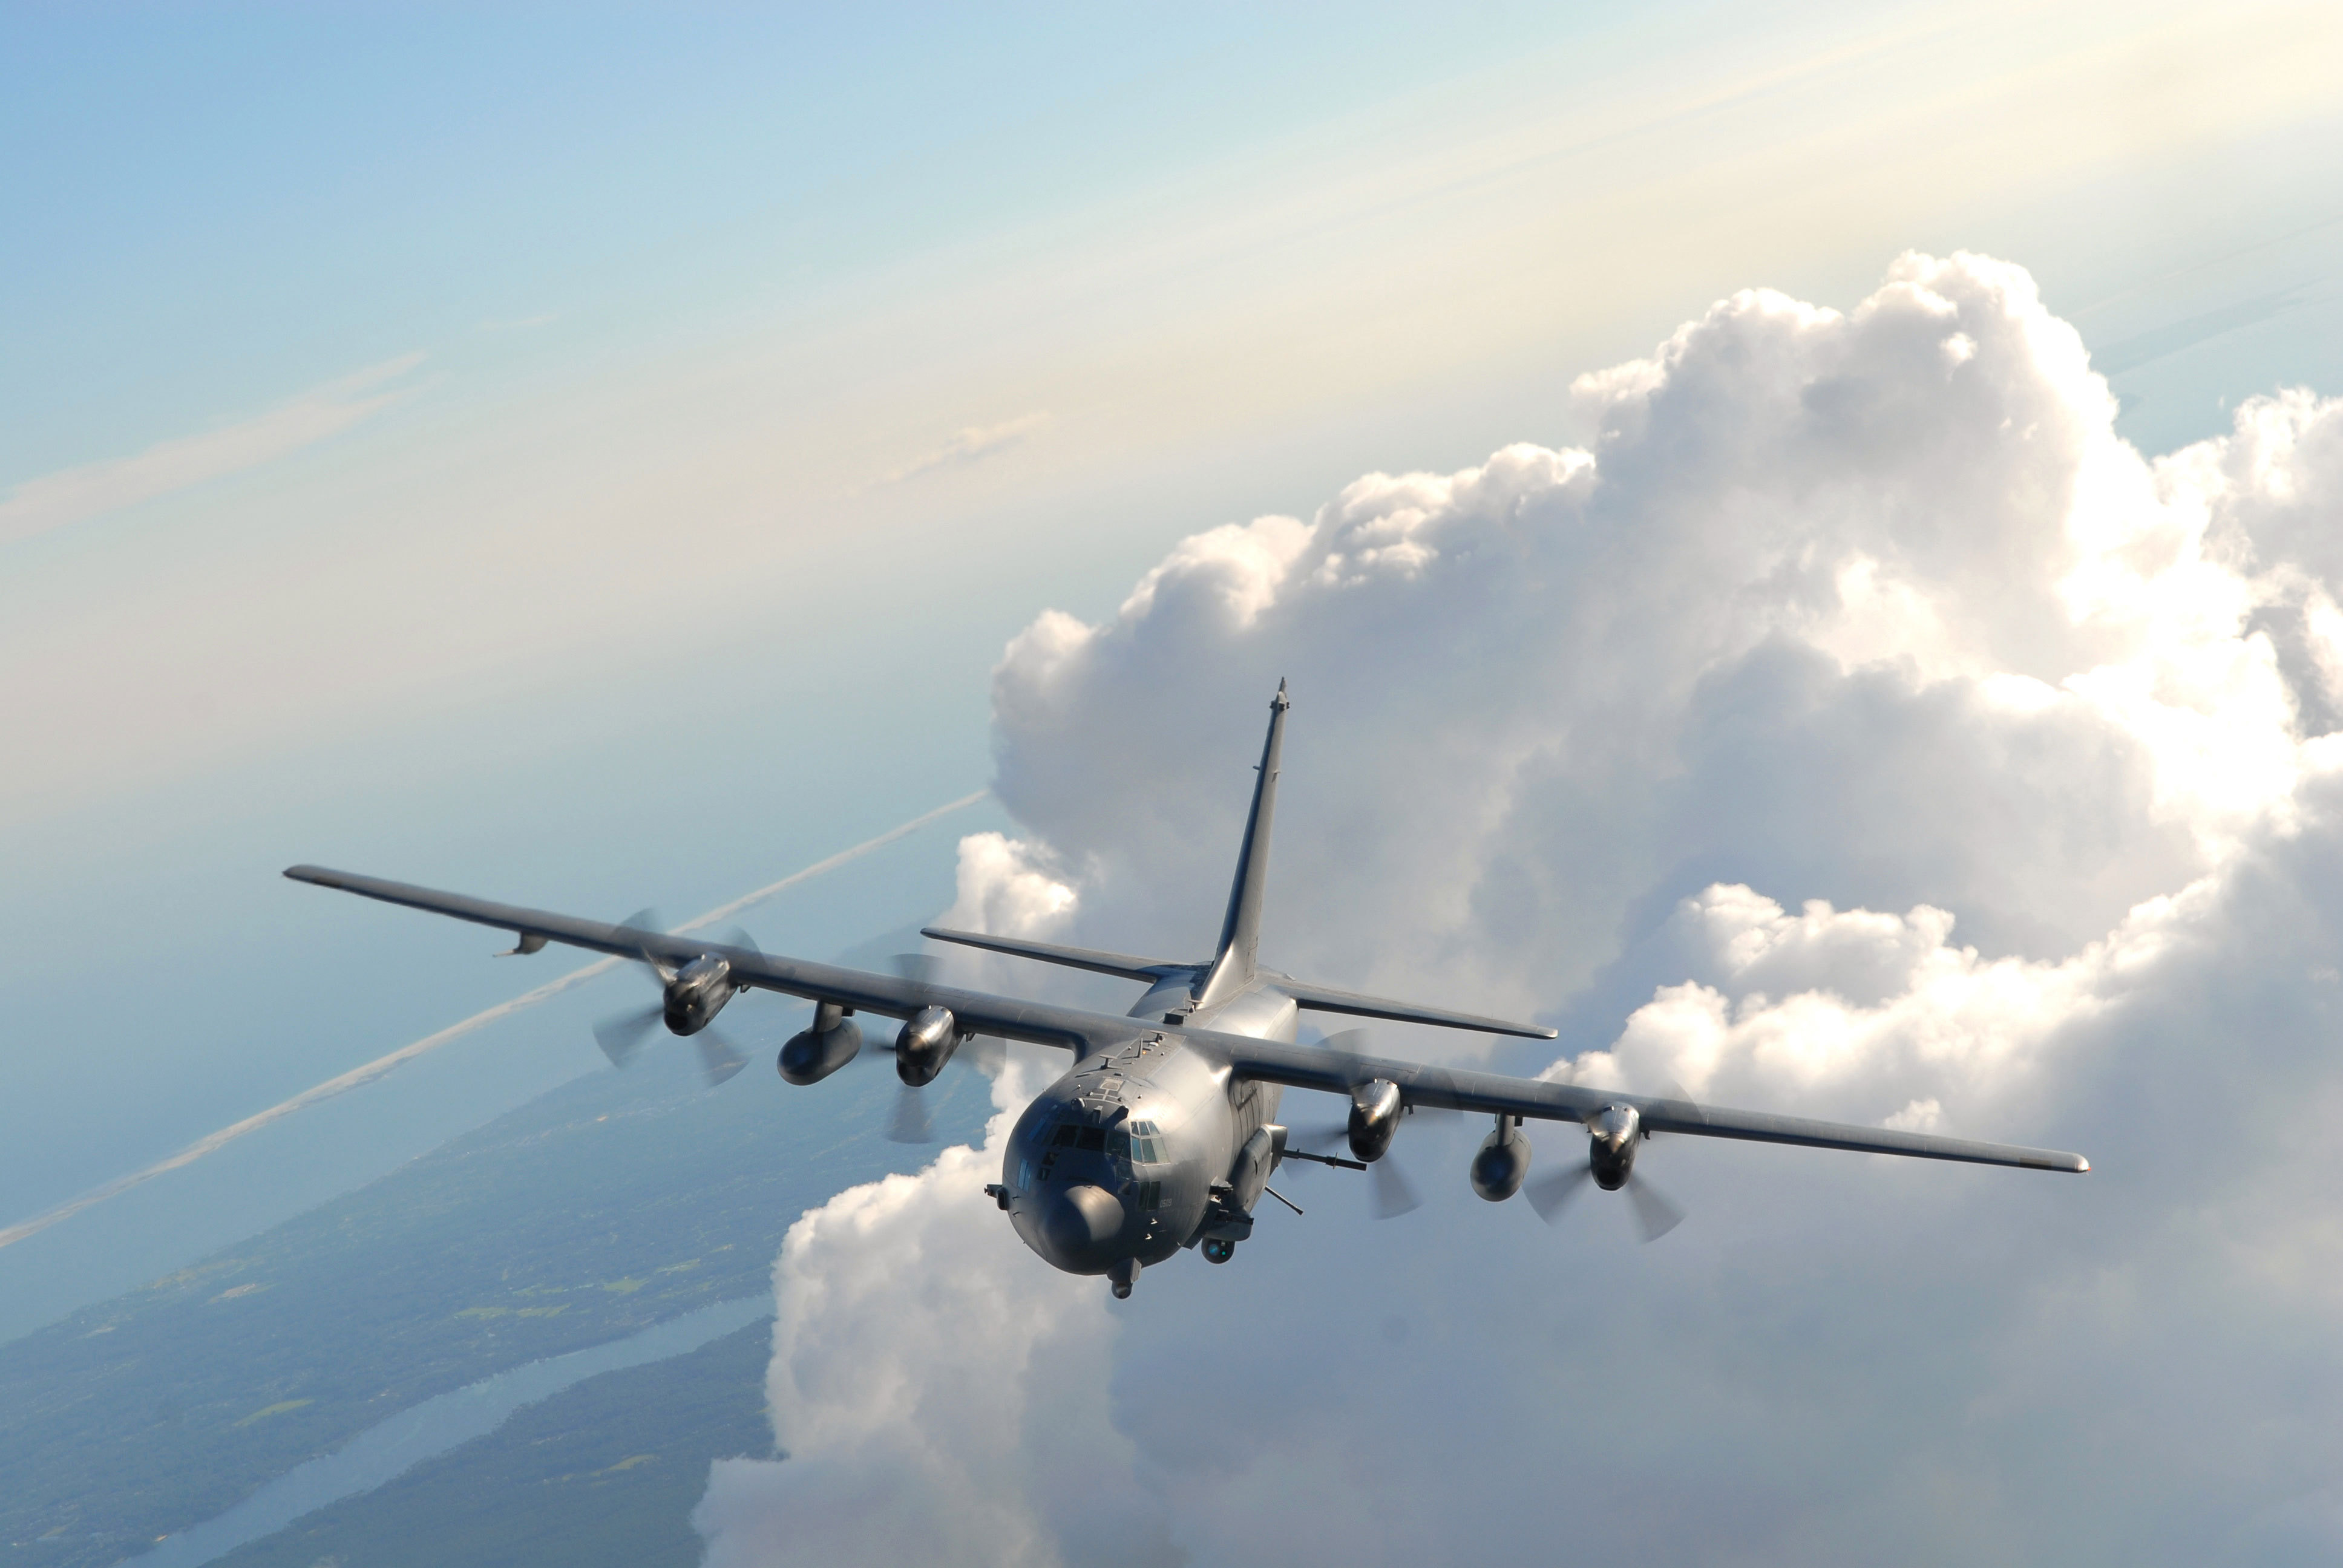 Самолет находящийся в полете преодолевает 140. Lockheed AC-130. Ганшип АС-130. Lockheed c-130 Hercules. AC-130 Spectre.